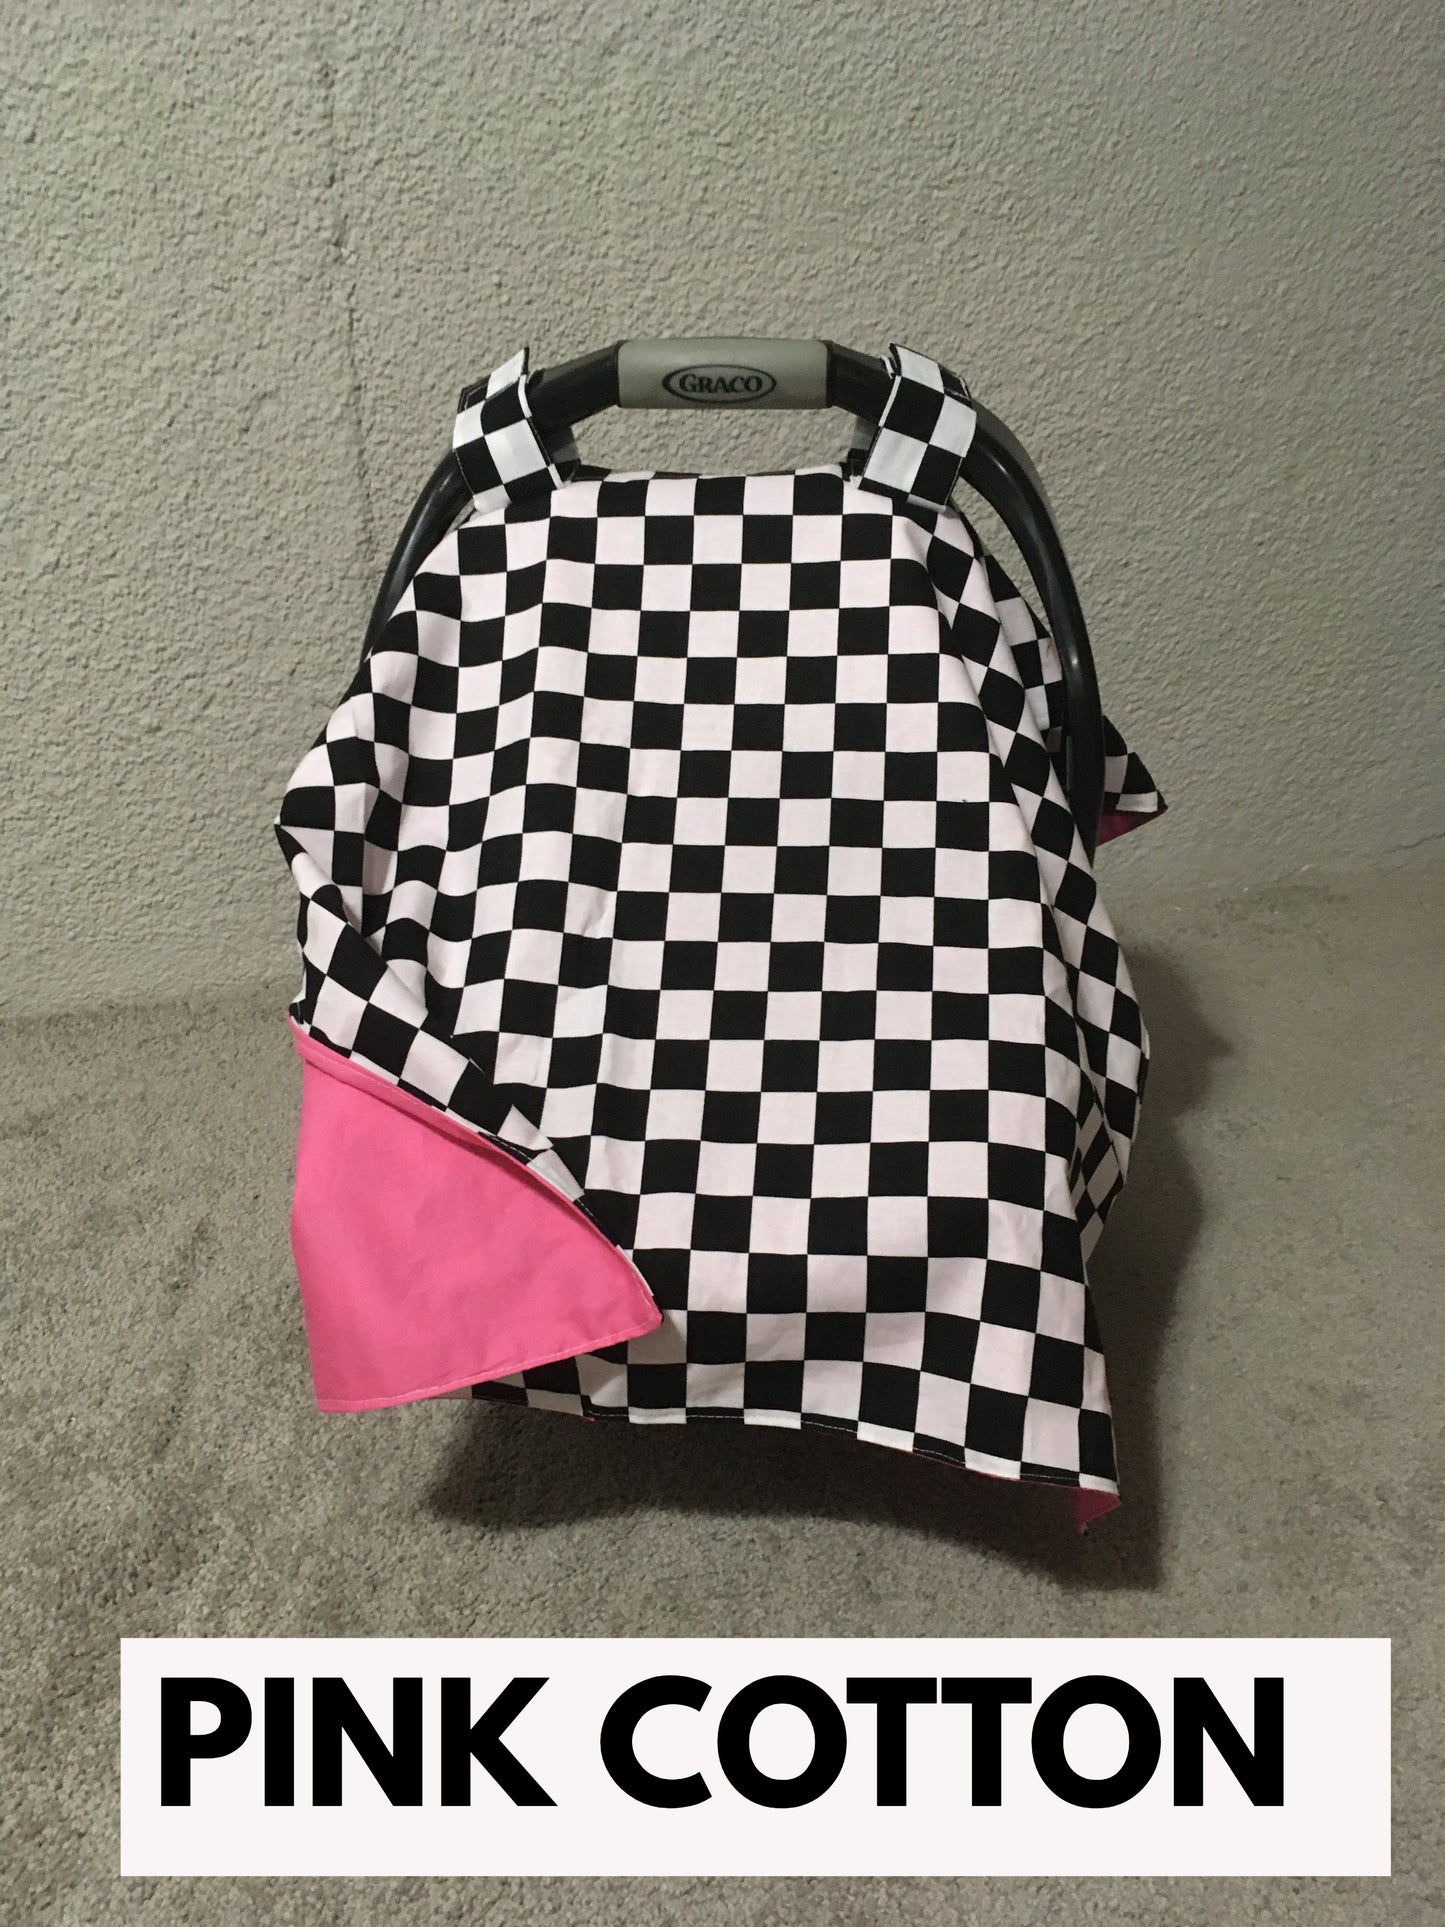 Racing Check Car Seat Canopy Cover, Racing Baby Gifts, Racing Nursery